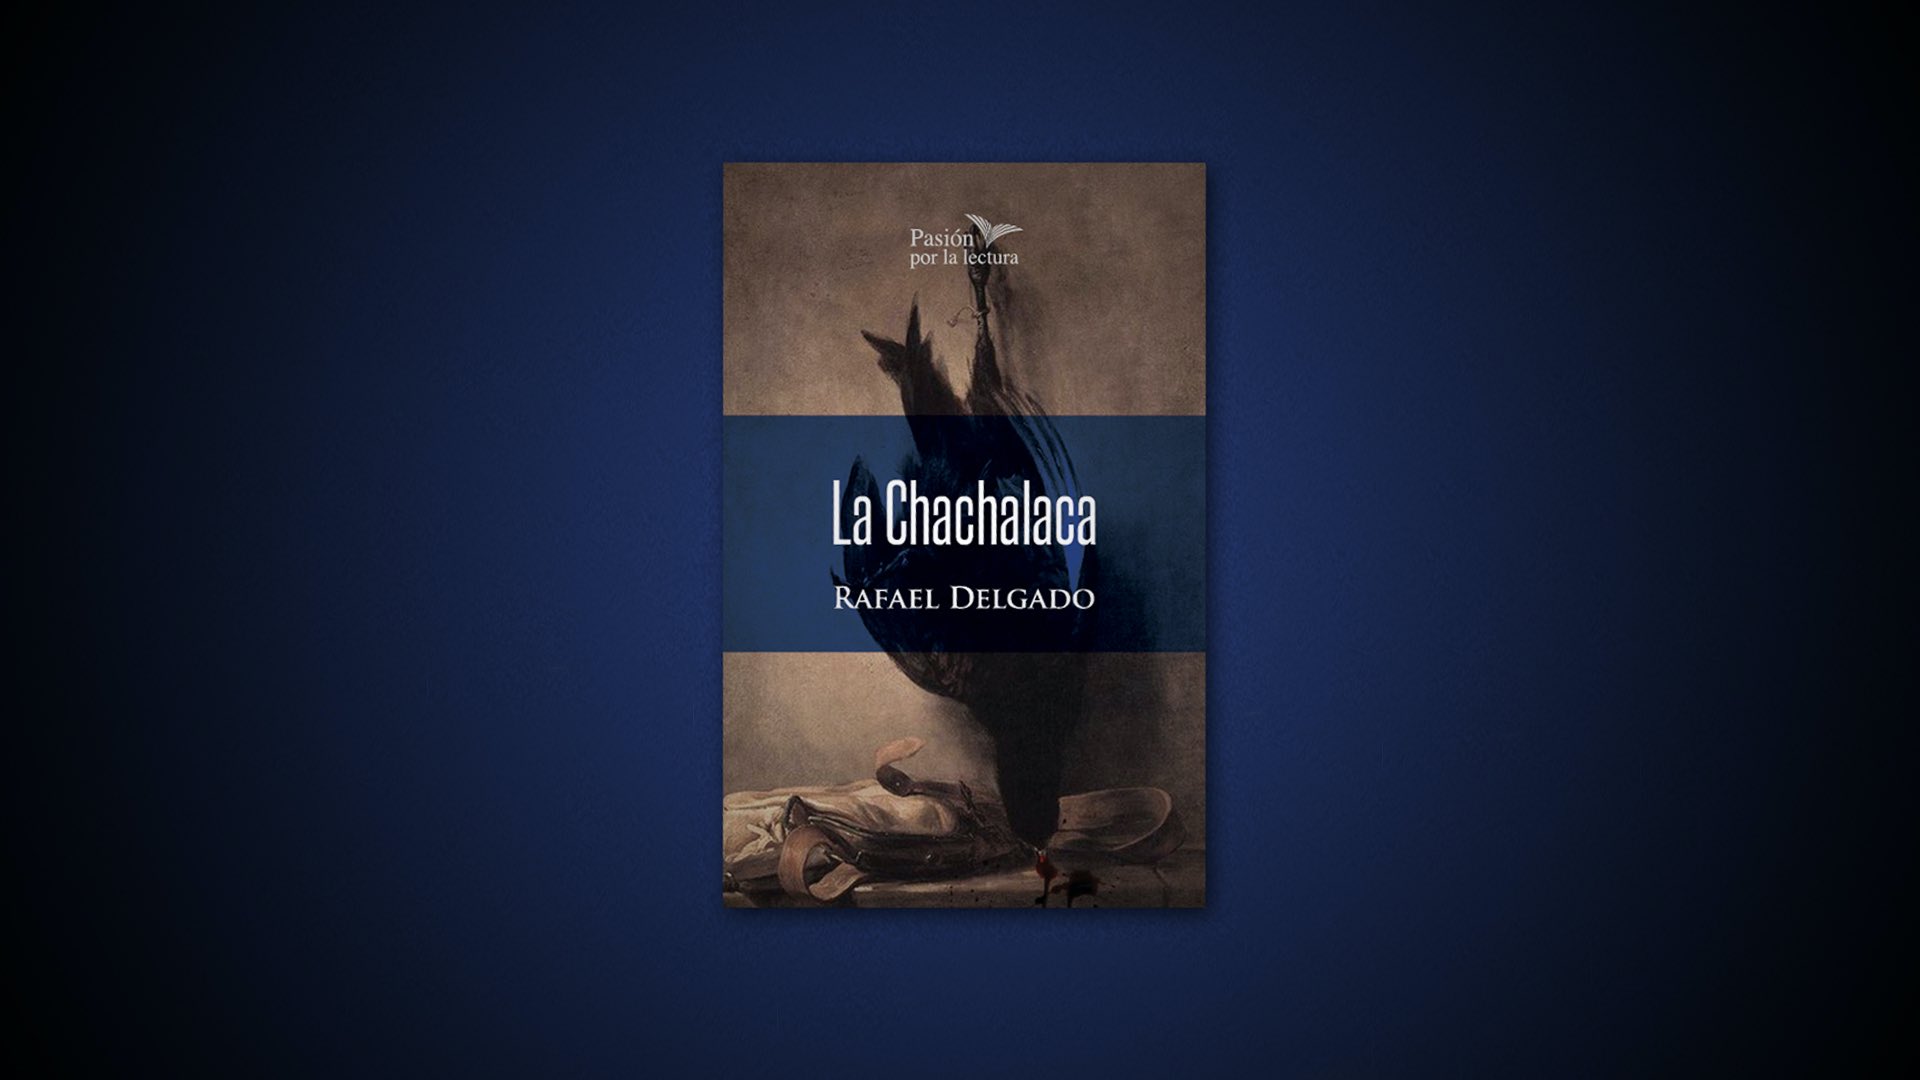 La chachalaca (The ortalis)